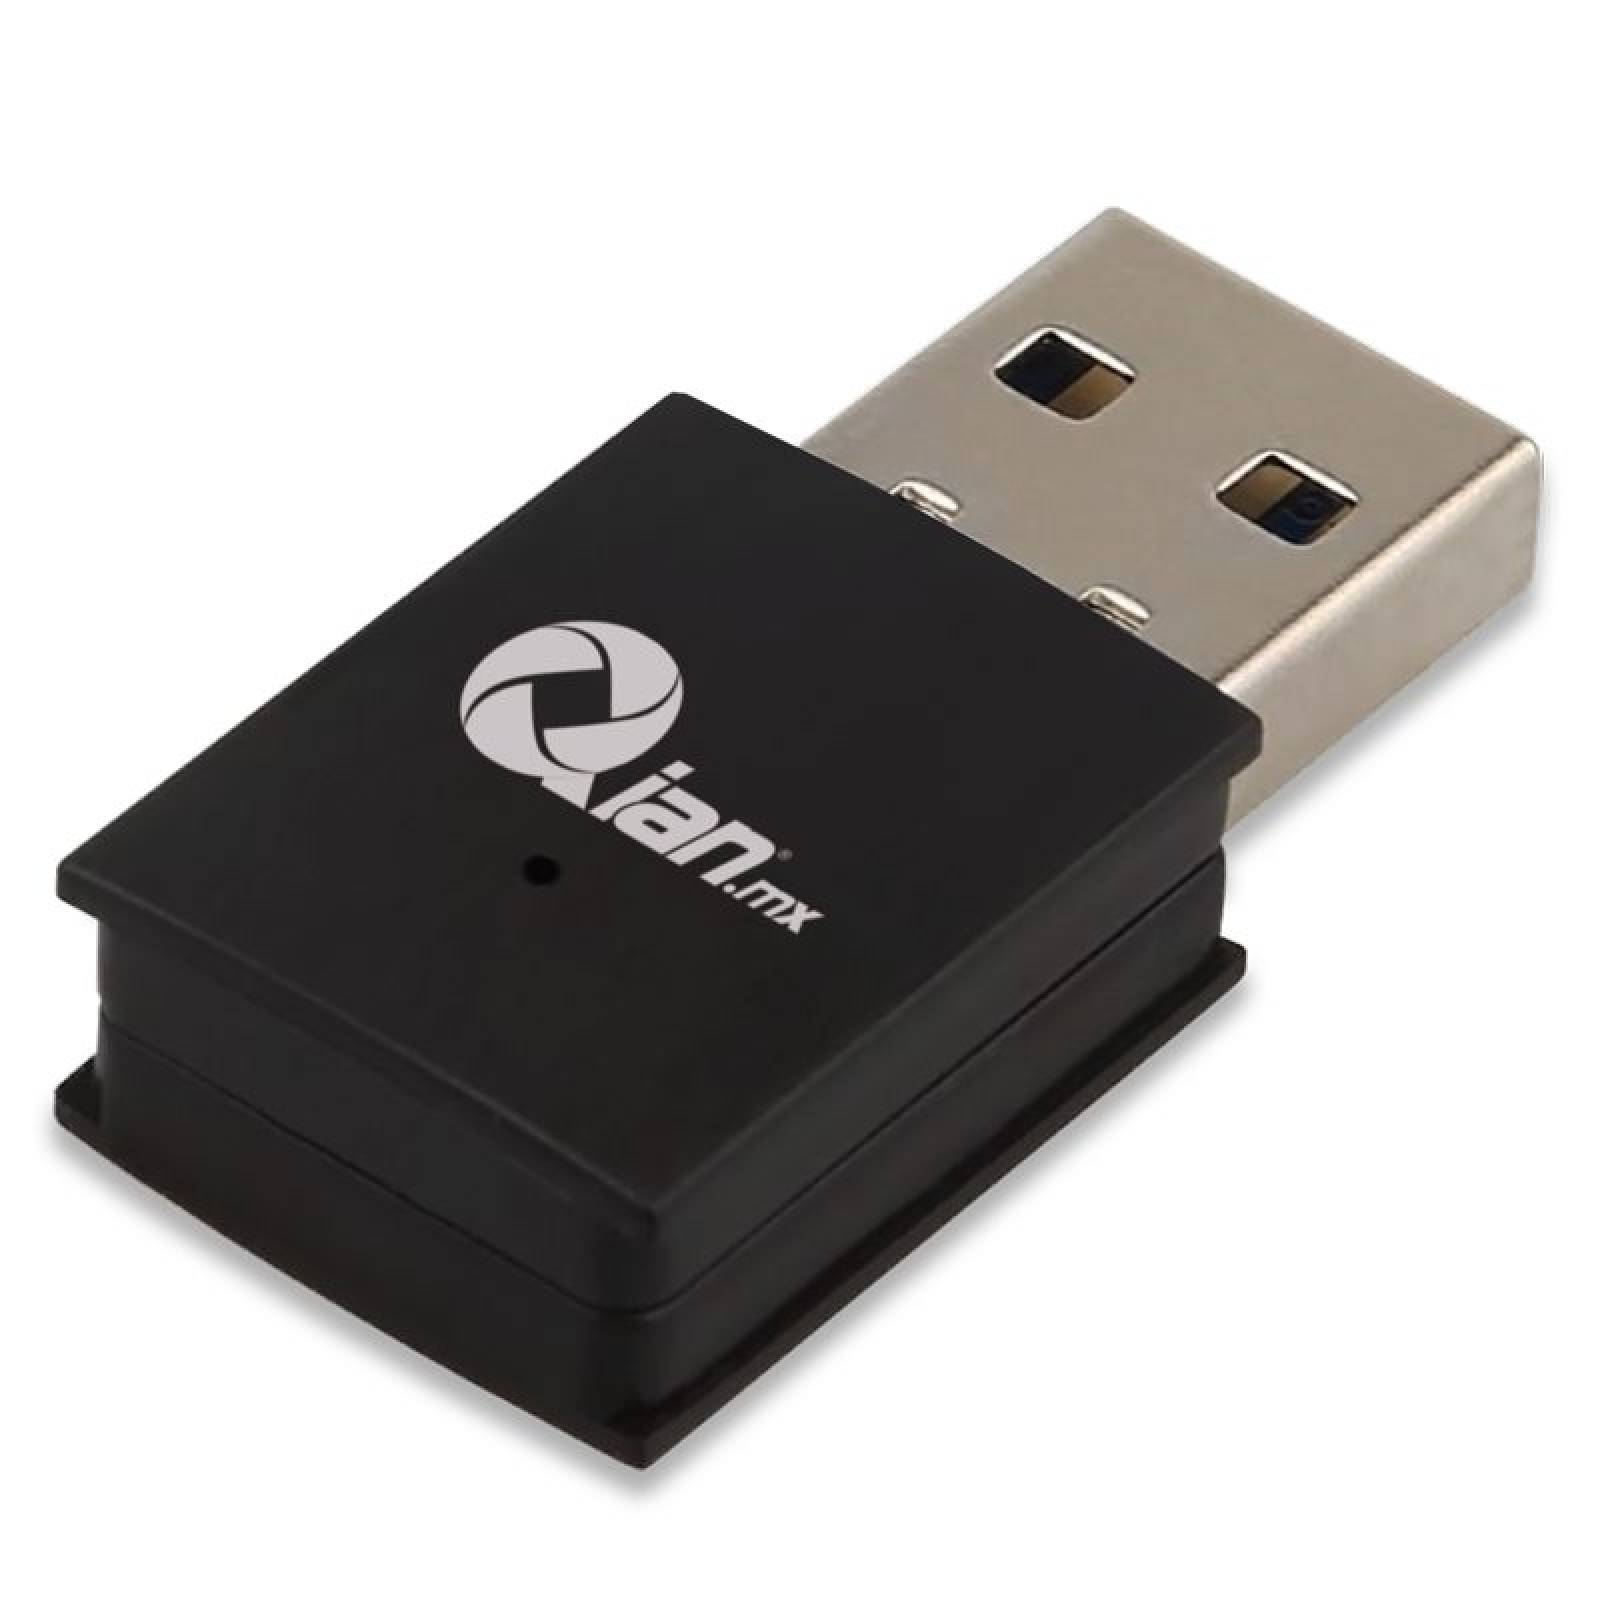 ADAPTADOR DE RED QIAN NW1550 USB 2.0, INALÁMBRICO, WI-FI, BLUETOOTH 4.0, 2.4GHZ, NEGRO (NW1550)